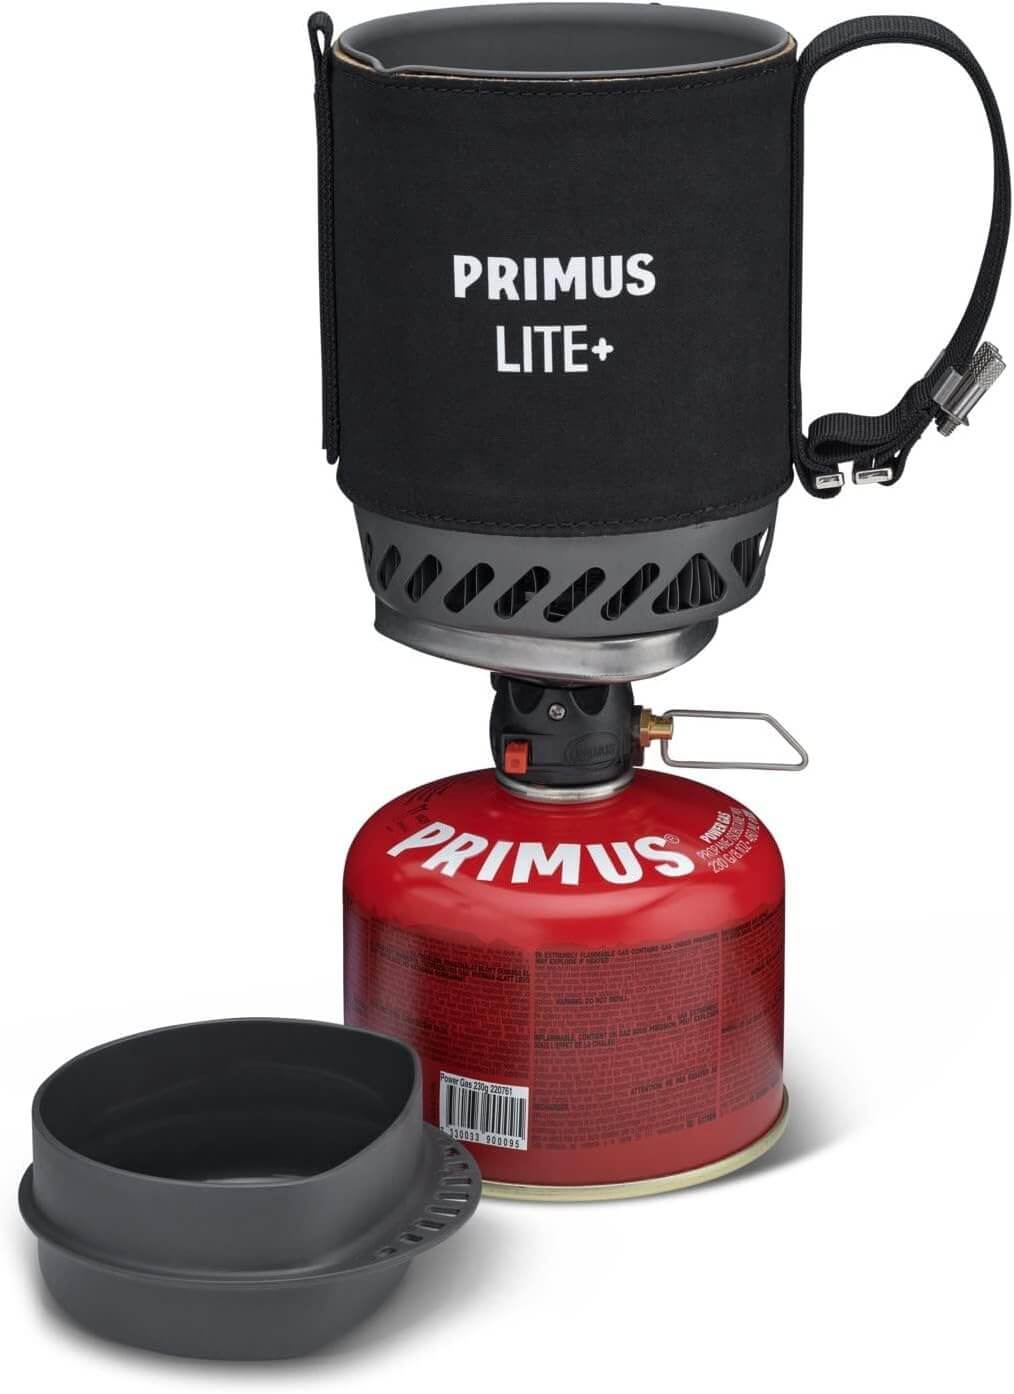 Primus Lite Plus Kocherset Stove System